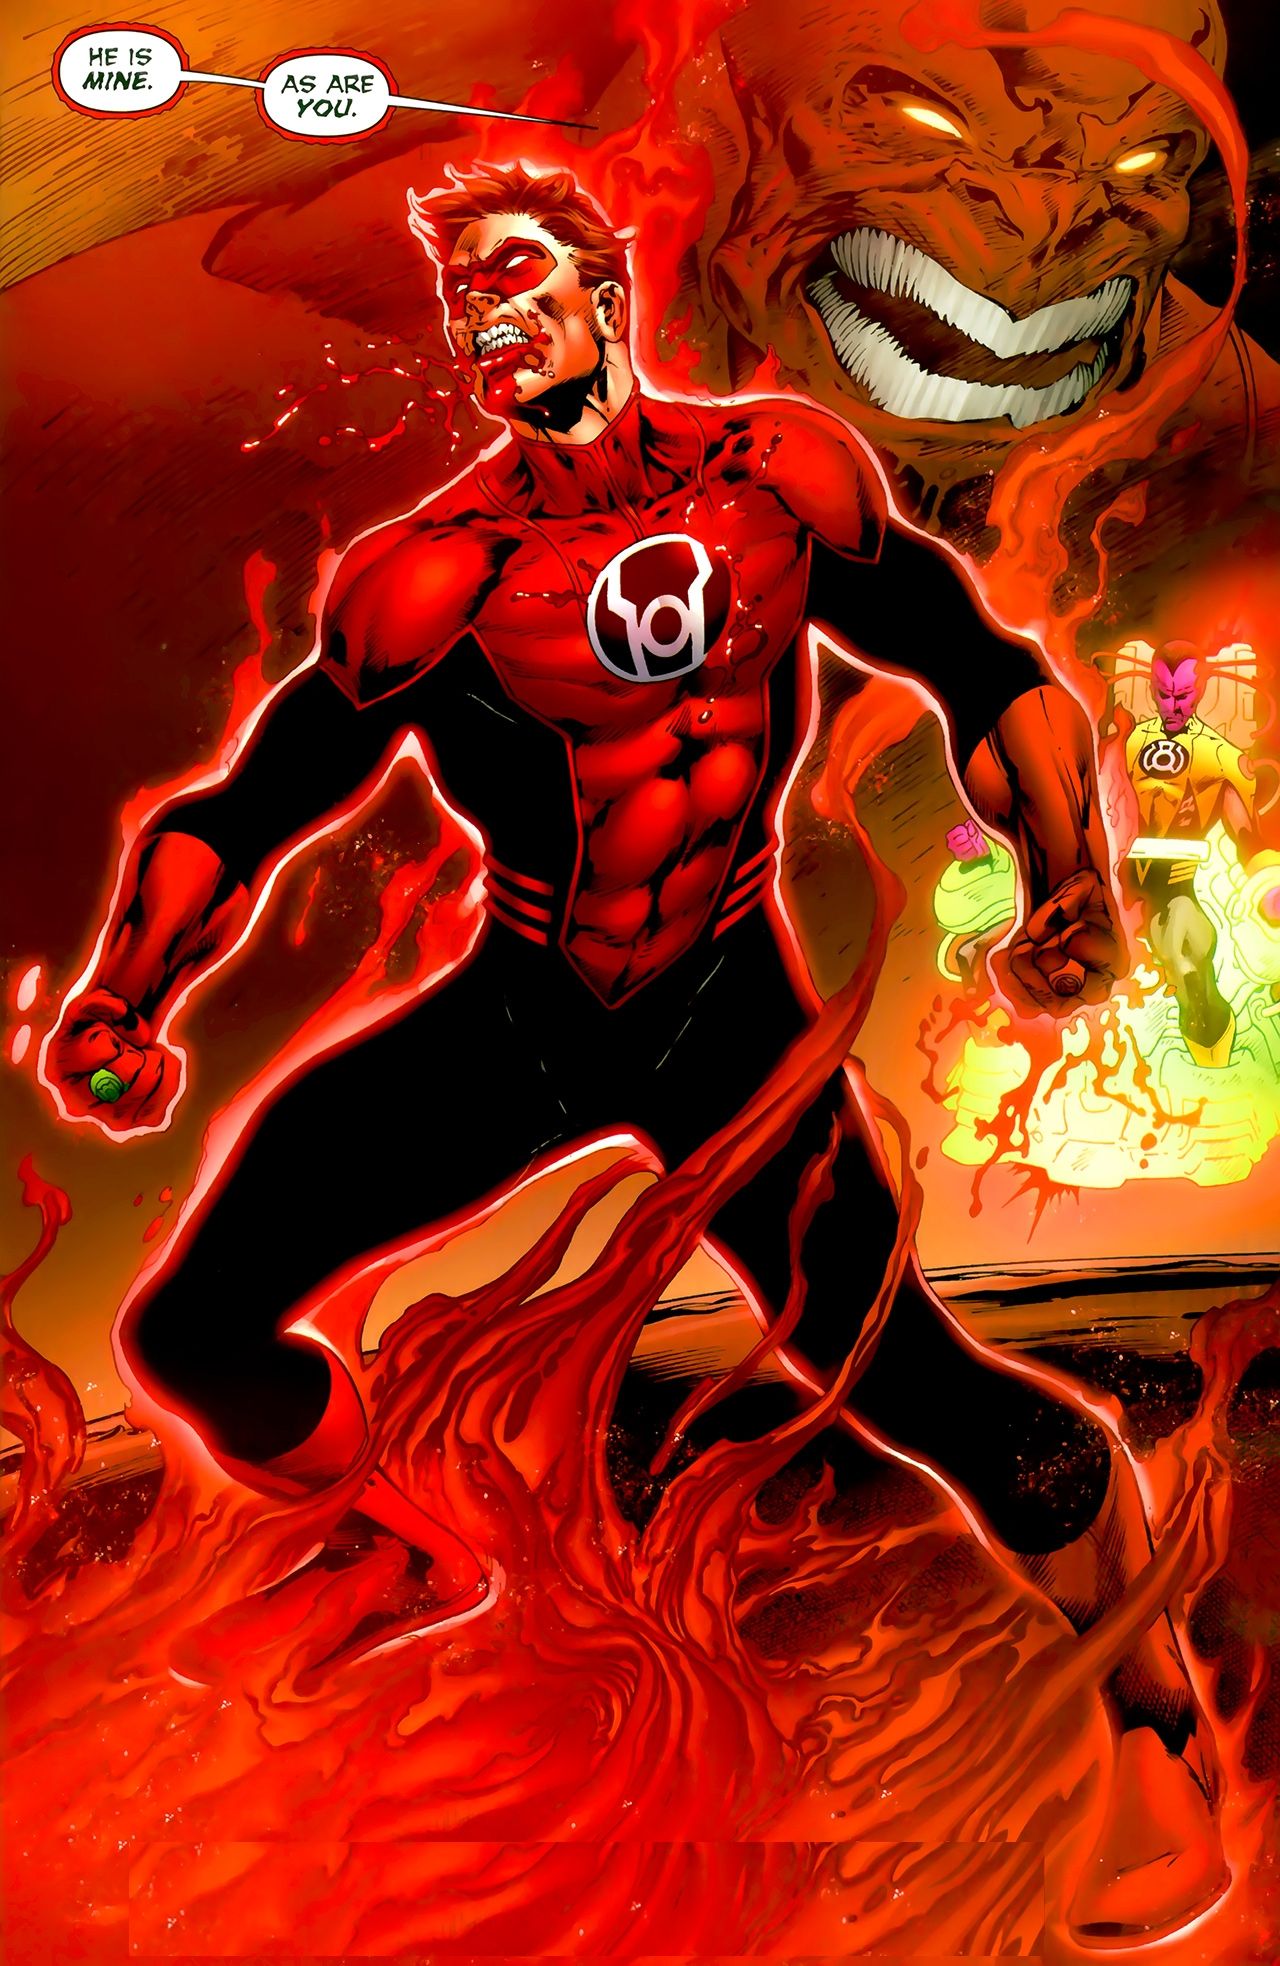 atrocitus vs hal jordan. Sinestro vs Atrocitus vs Hal vs Saint Walker. Personajes de marvel, Red lantern corps, Green lantern corps